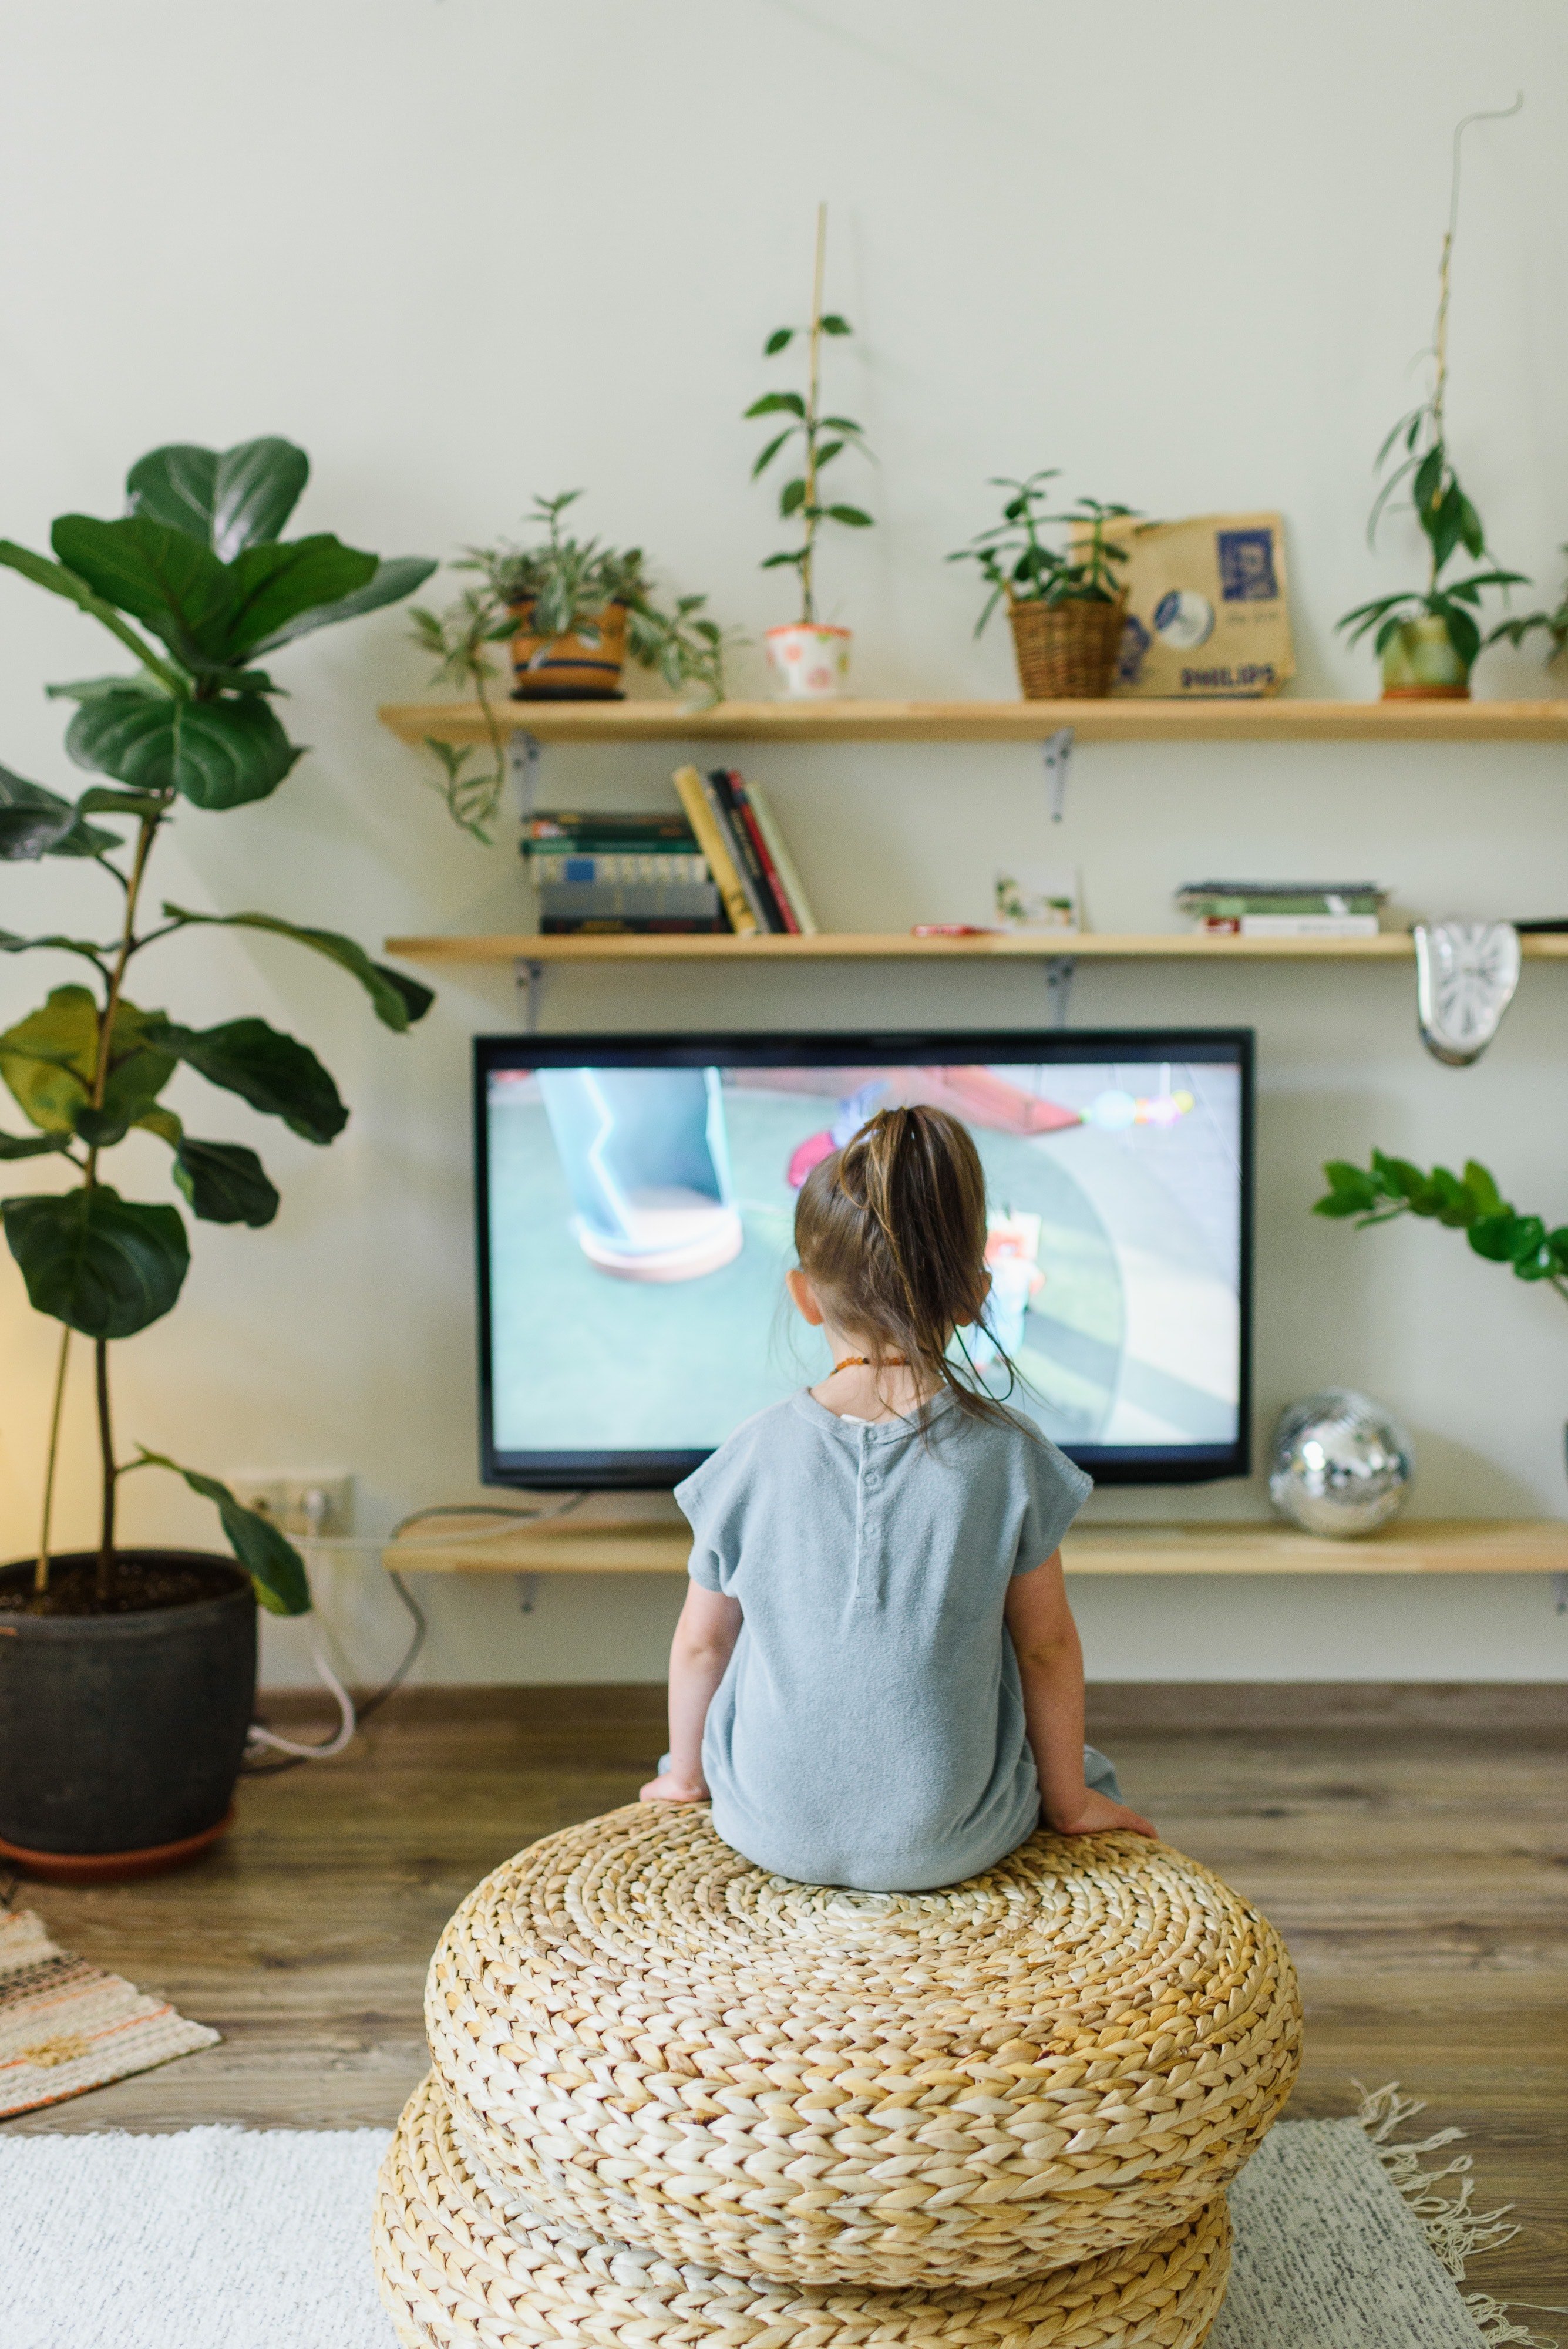 Girl watching television | Photo: Pexels